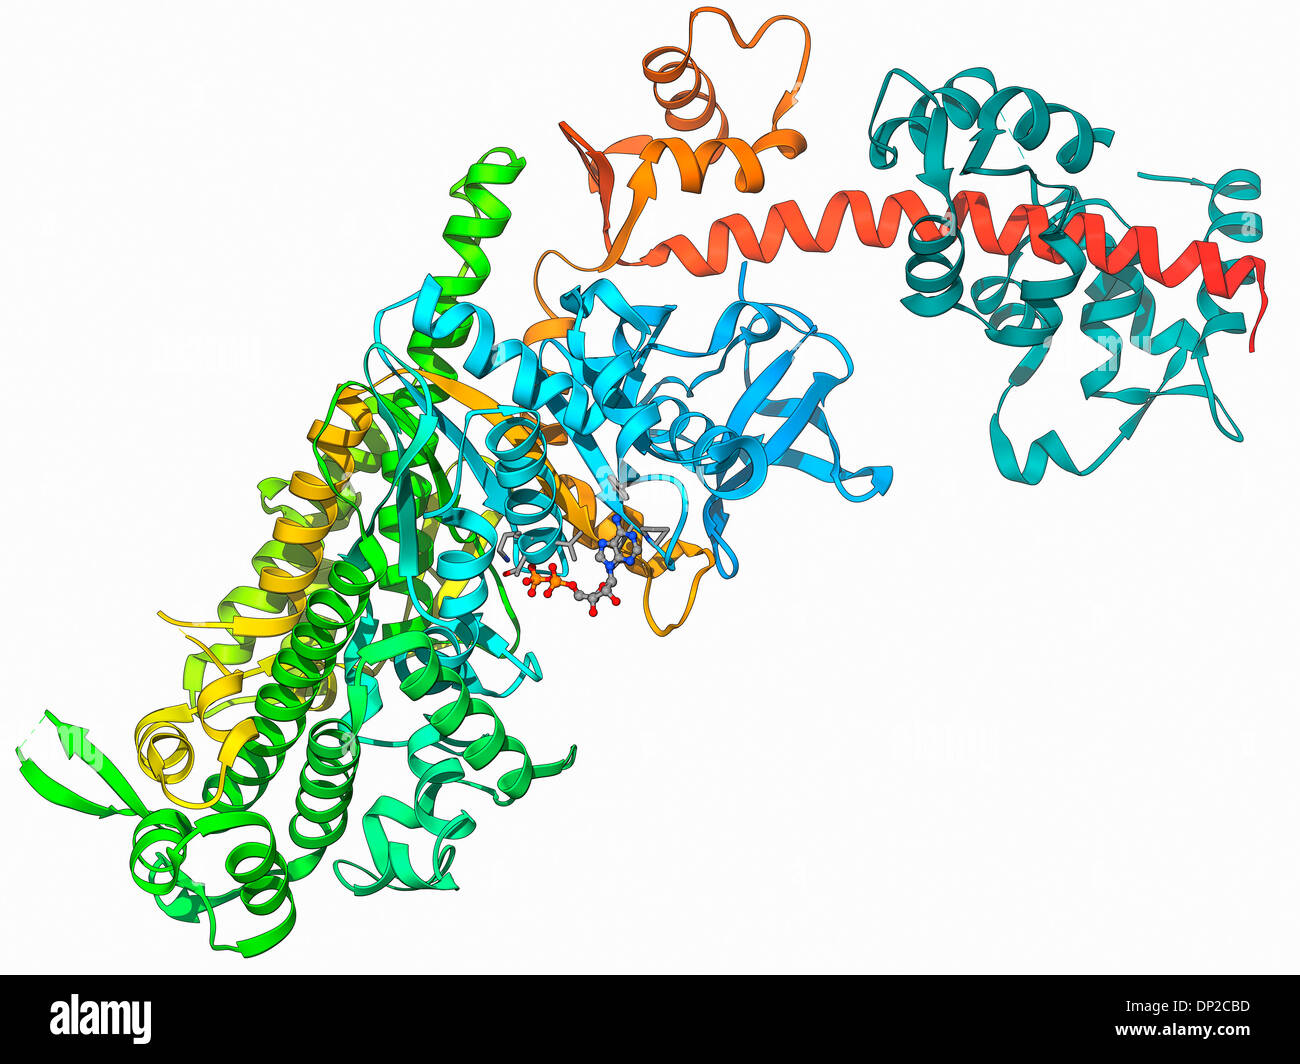 Molecular motor protein Stock Photo